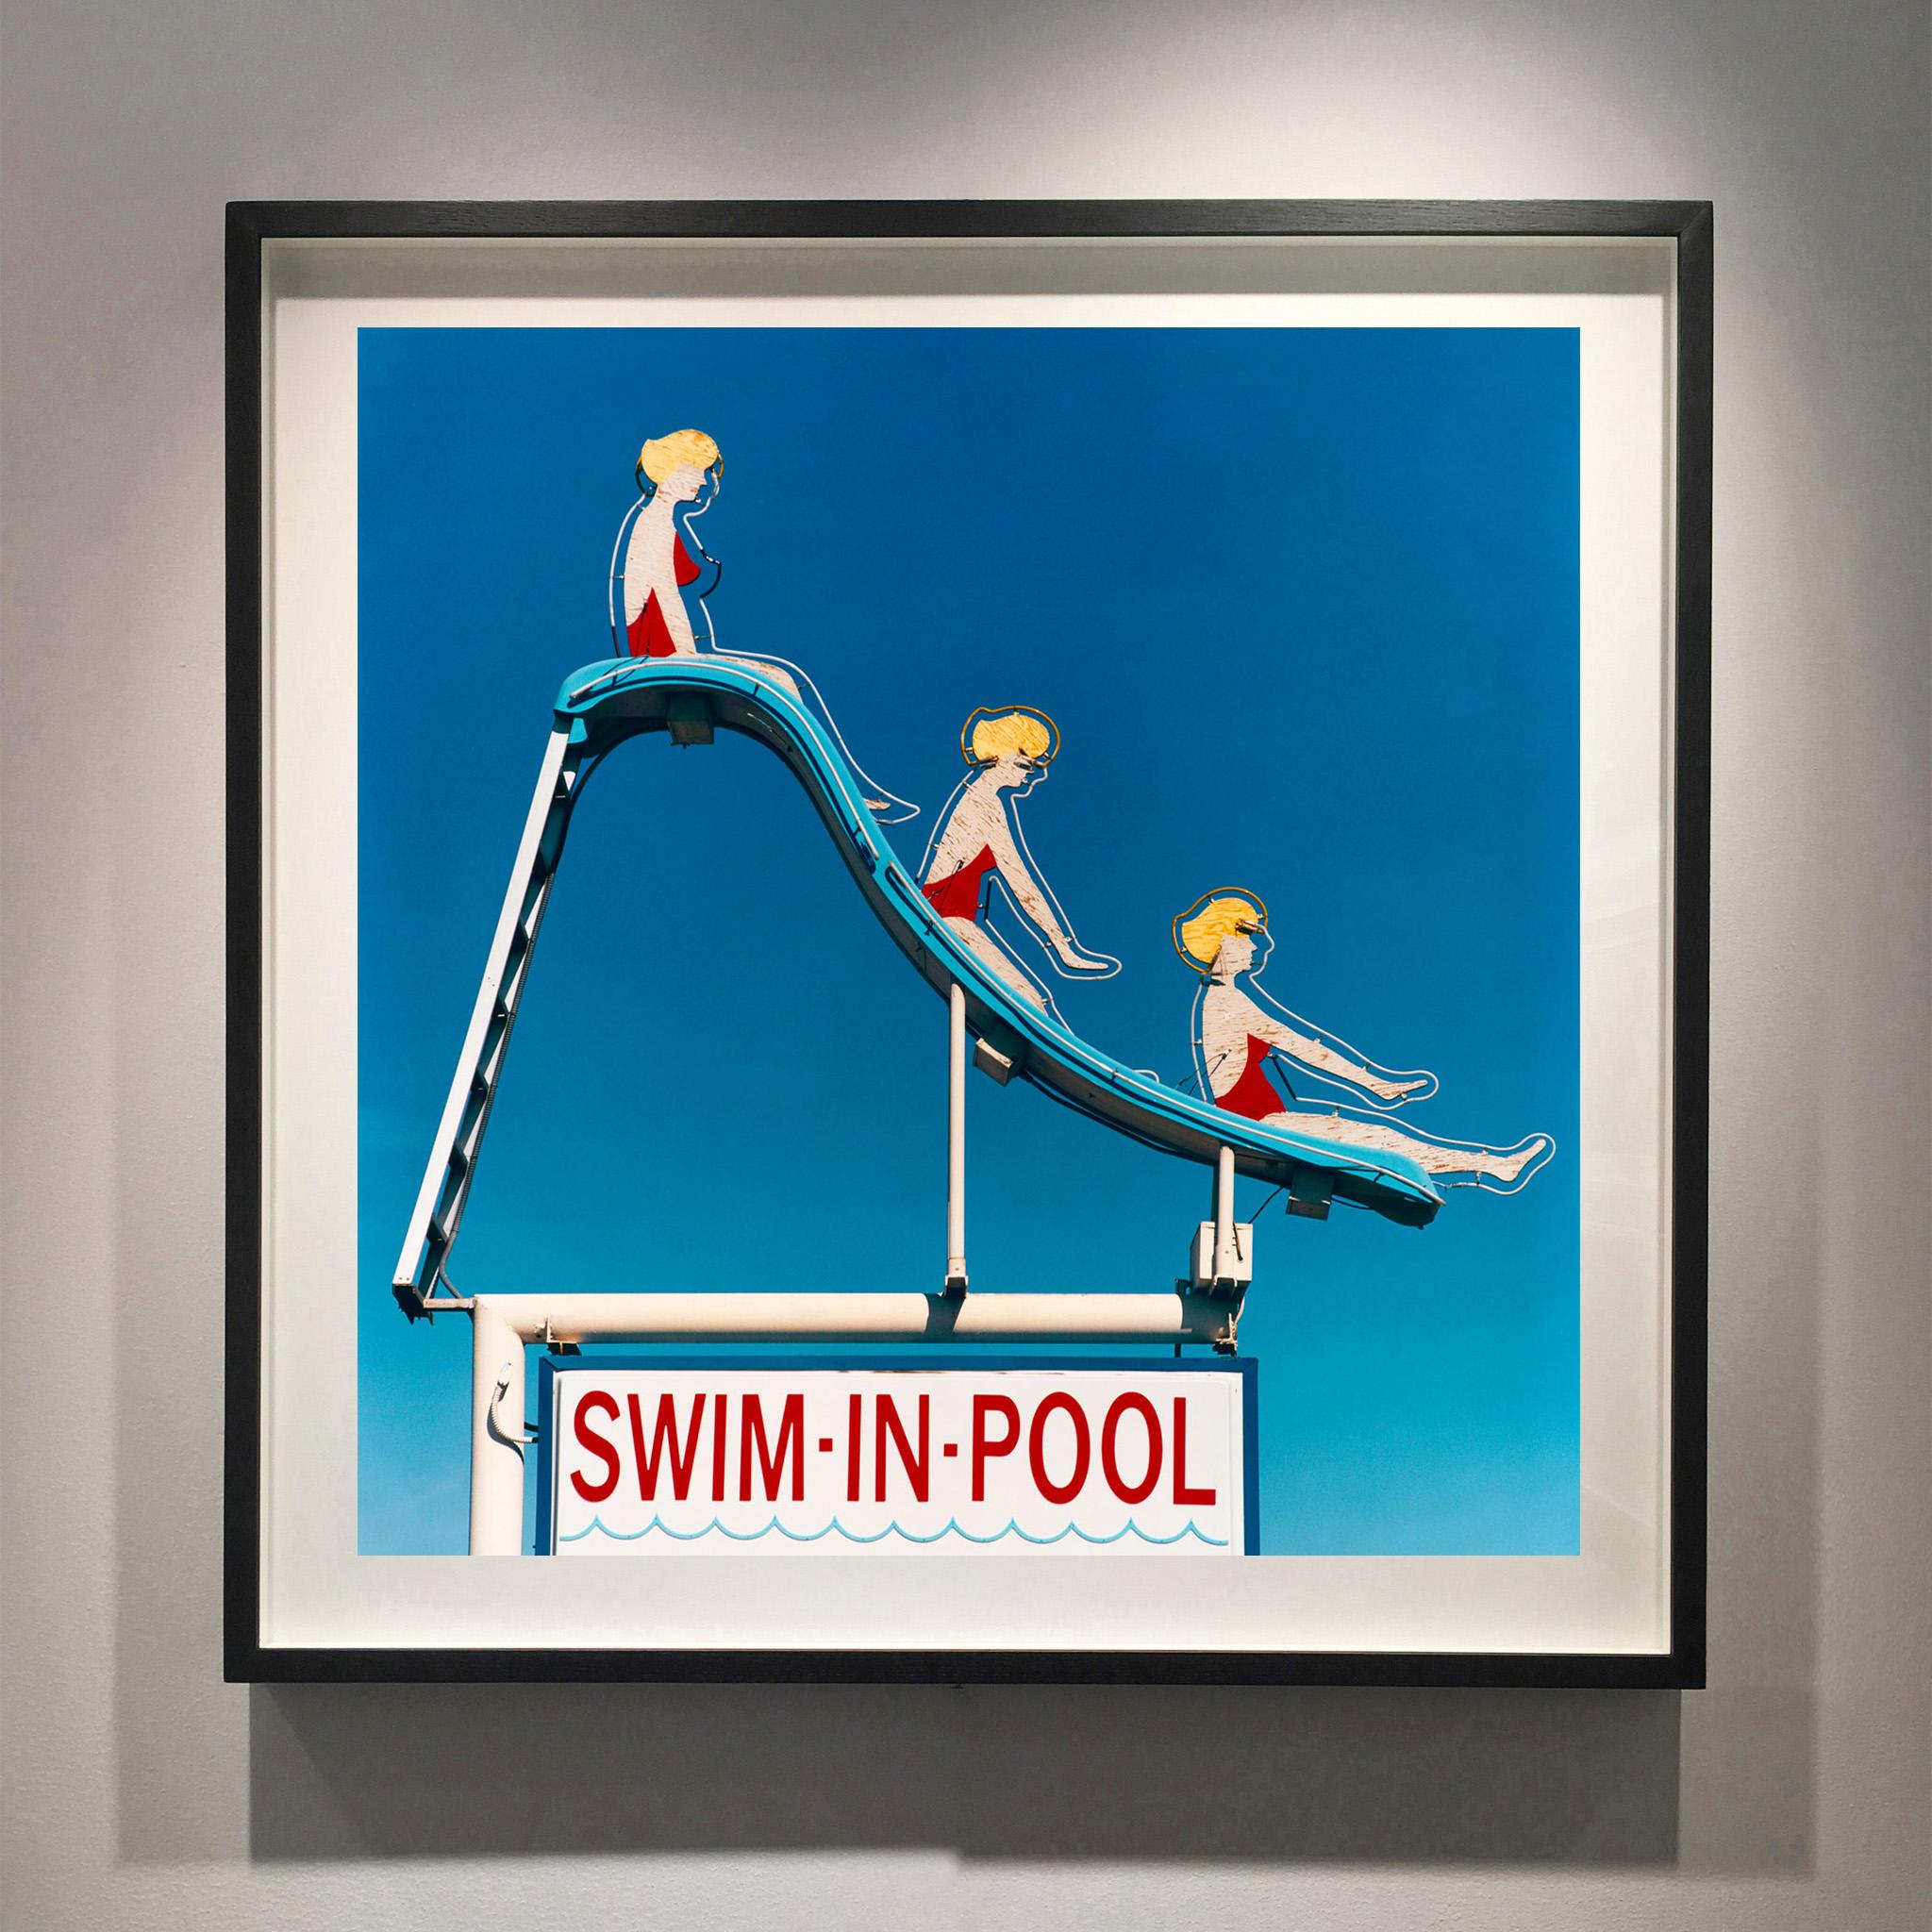 Swim-in-Pool, Las Vegas, Nevada - Americana Pop Art Farbfotografie – Print von Richard Heeps